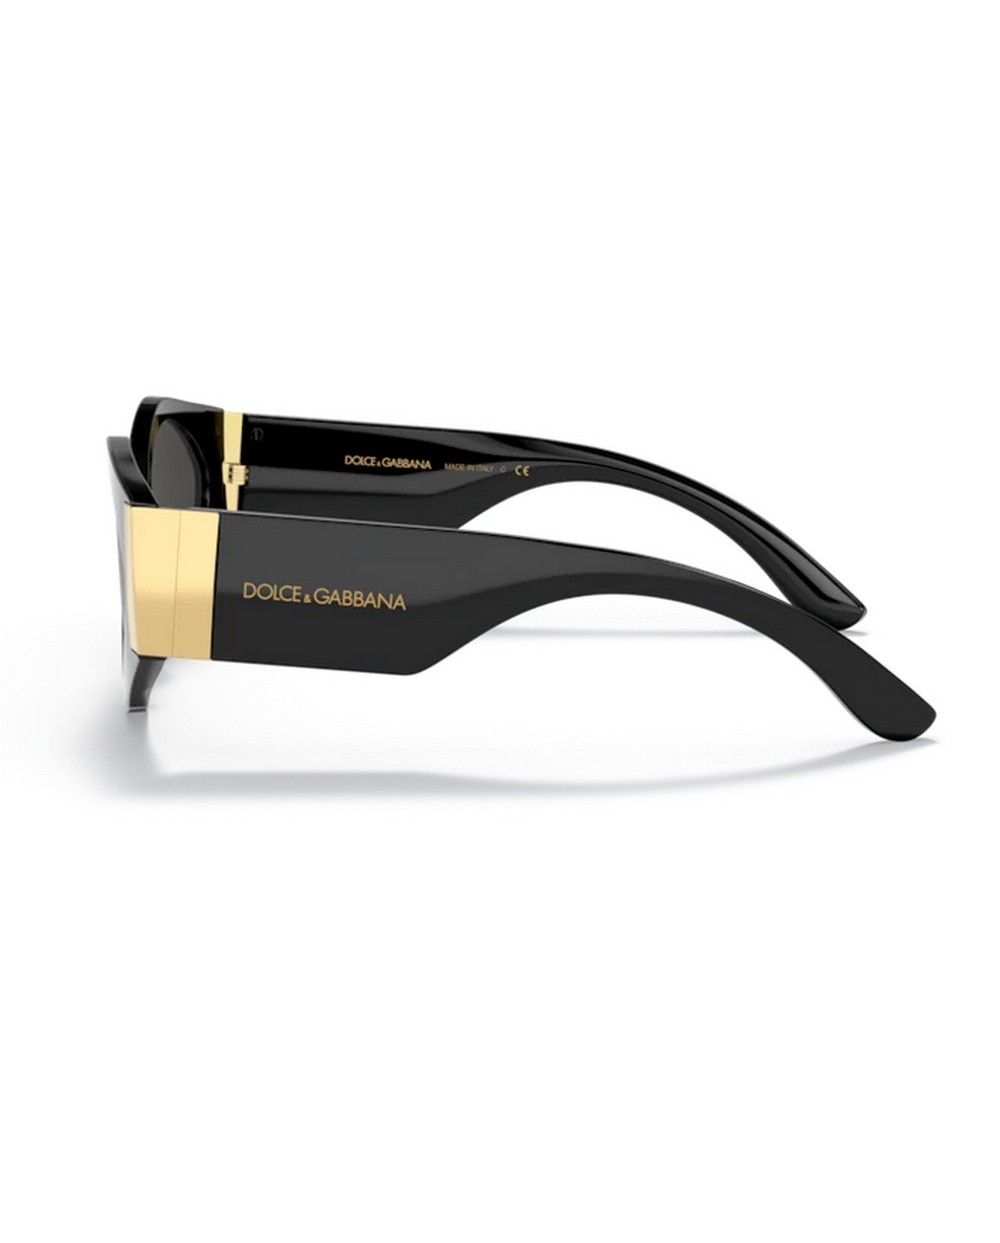 Women's sunglasses Dolce&gabbana DG 4396 original warranty italy DG 4396 |  eBay